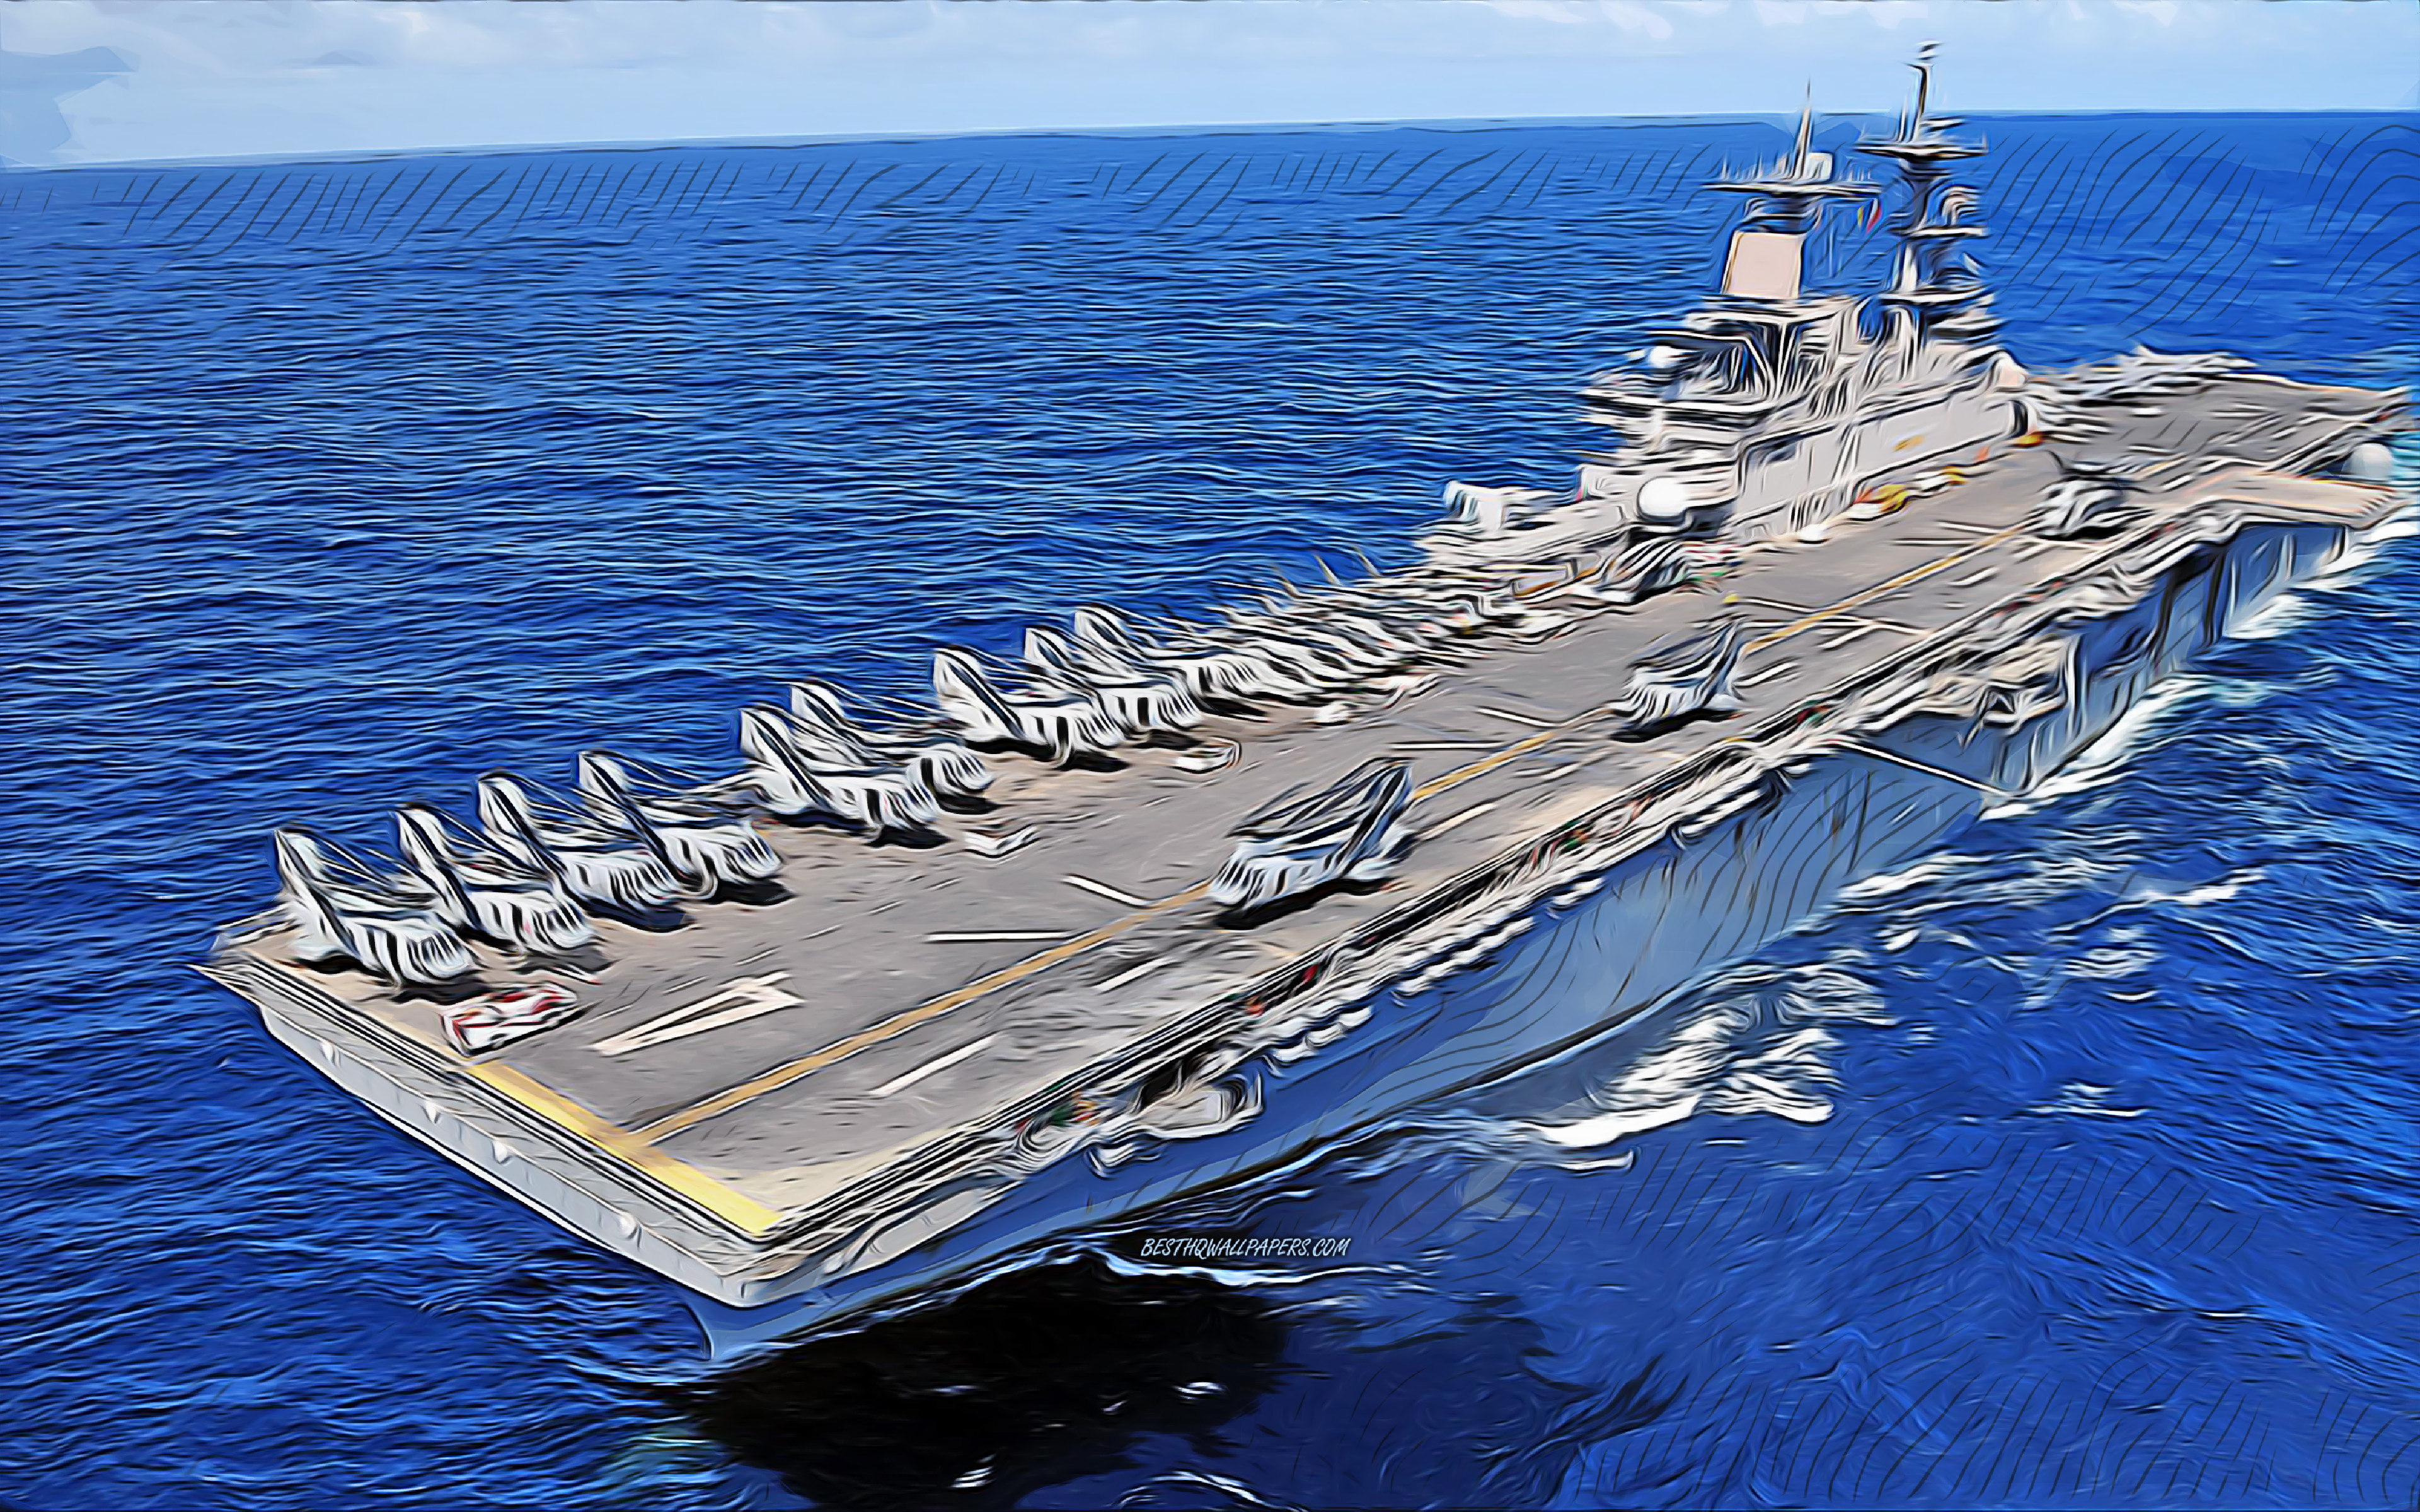 USS Boxer, 4k, vector art, LHD-4, amphibious assault ships, United States Navy, US army, abstract ships, battleship, US Navy, Wasp-class, USS Boxer LHD-4